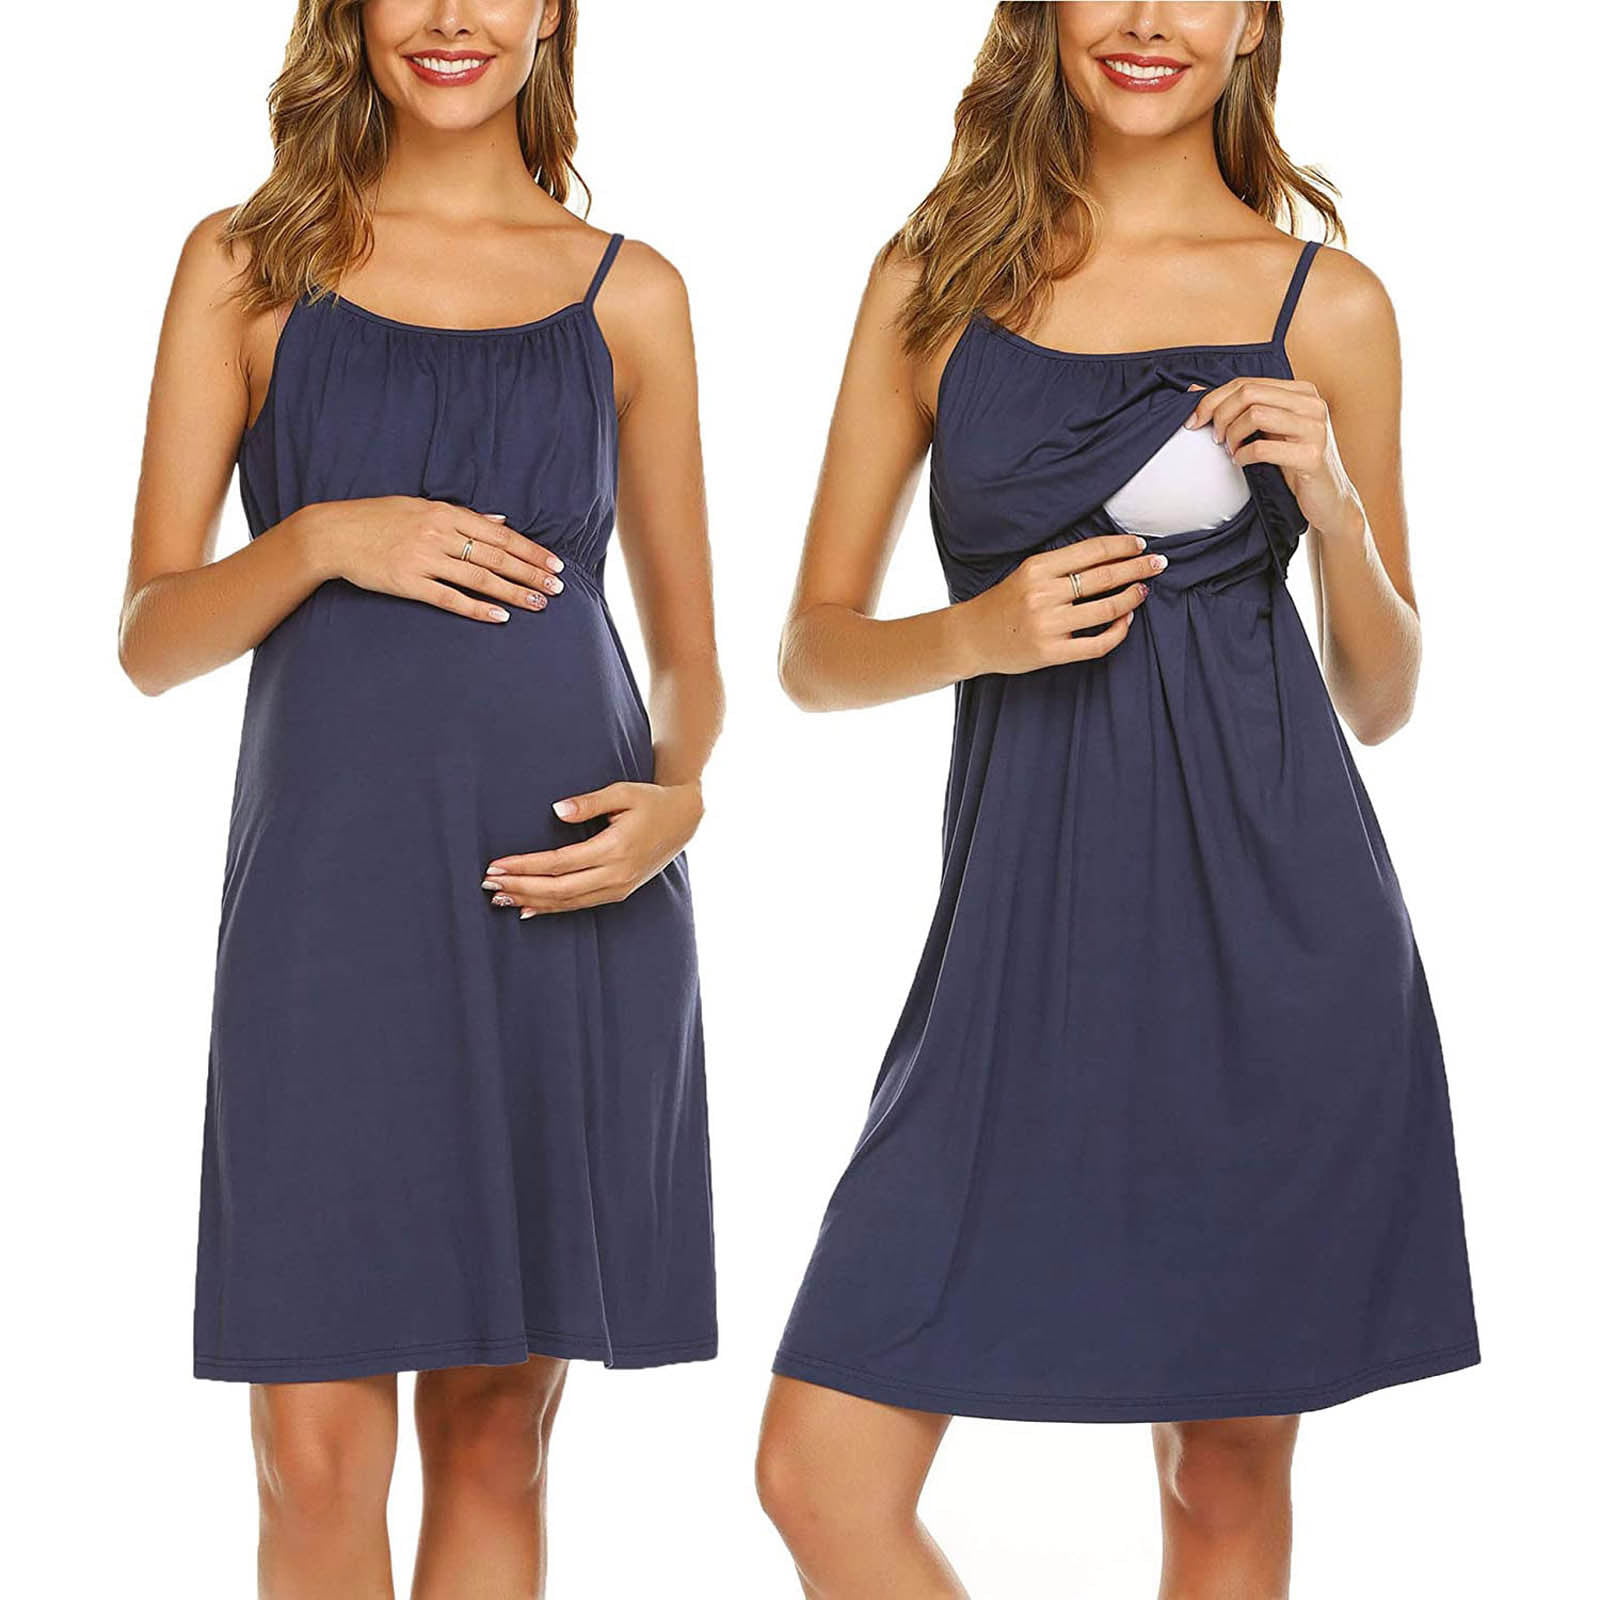 FINWANLO Womens Maternity Dress Sleeveless Nursing Nightgown Breastfeeding Nightshirt Sleepwear with Pocket 